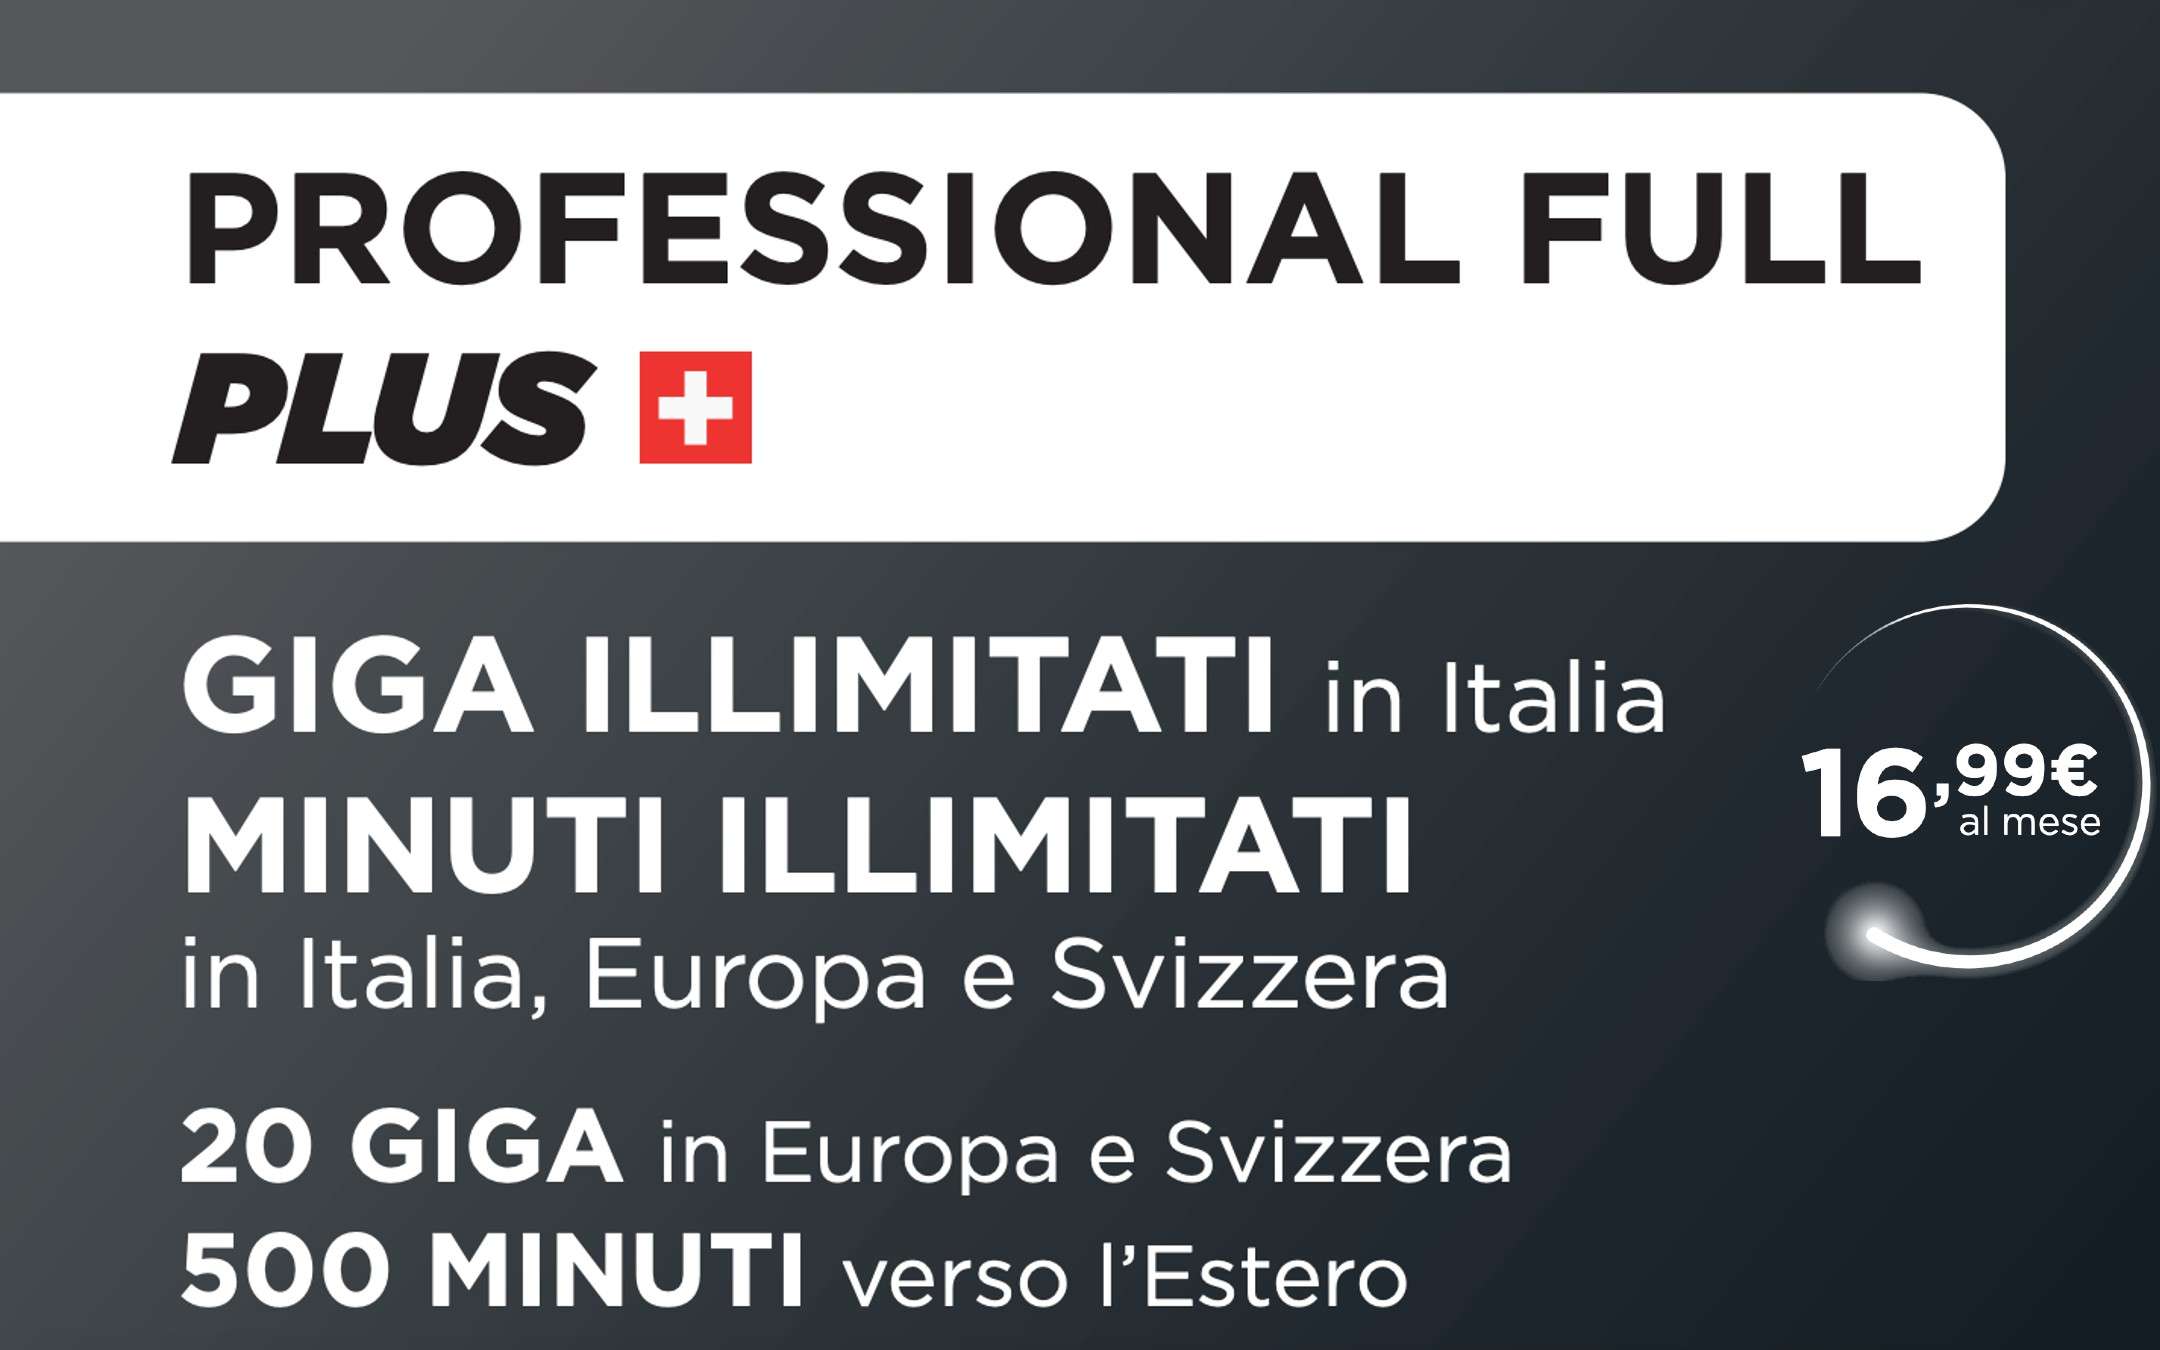 Professional Full Plus: PROMO P.IVA W3 a 16,99€